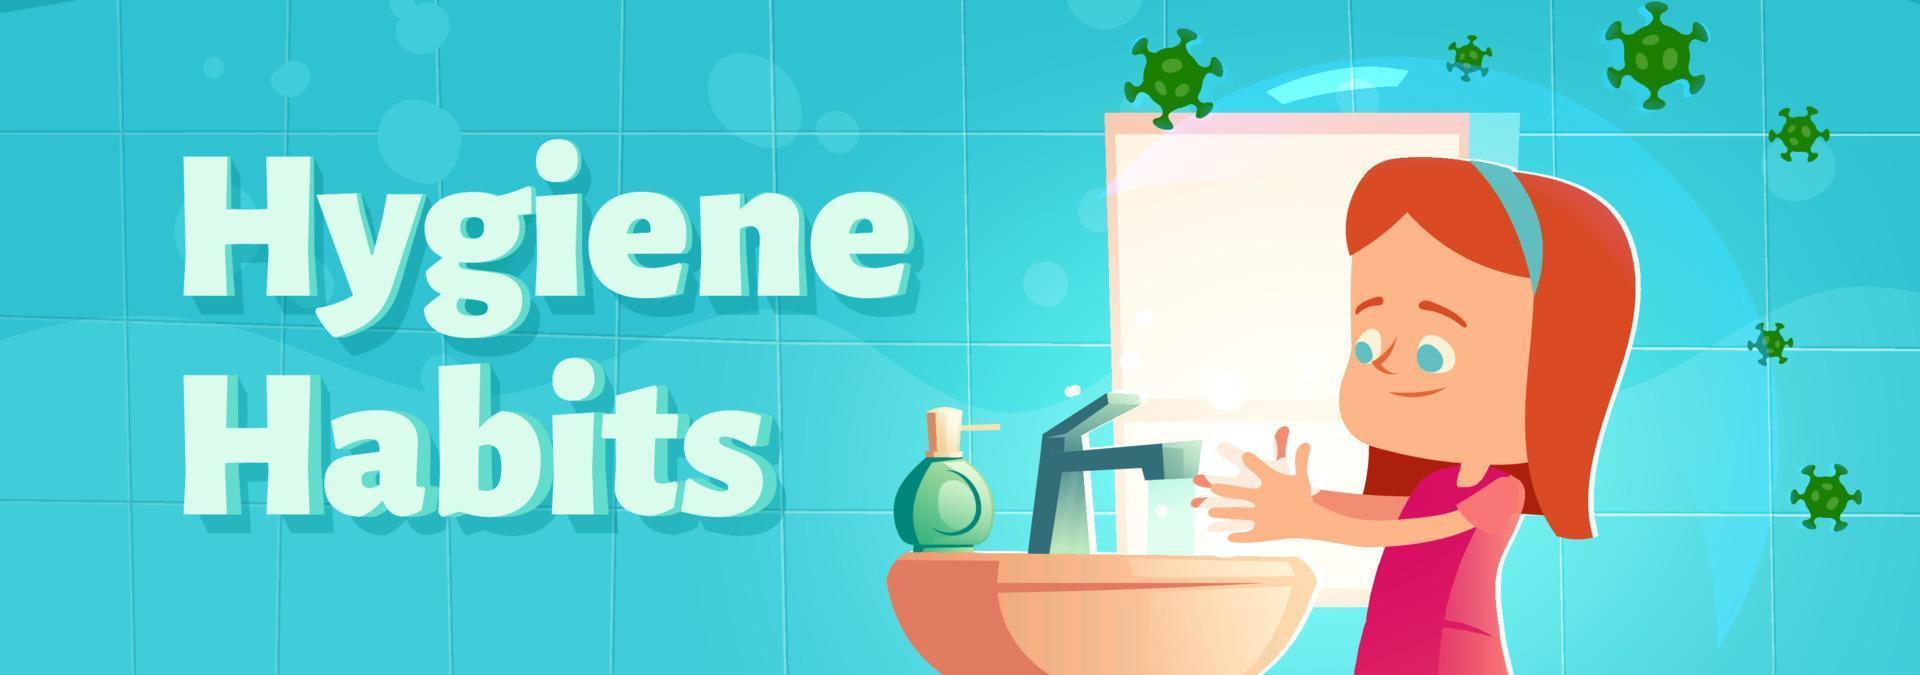 Hygiene habits cartoon banner, girl washing hands vector